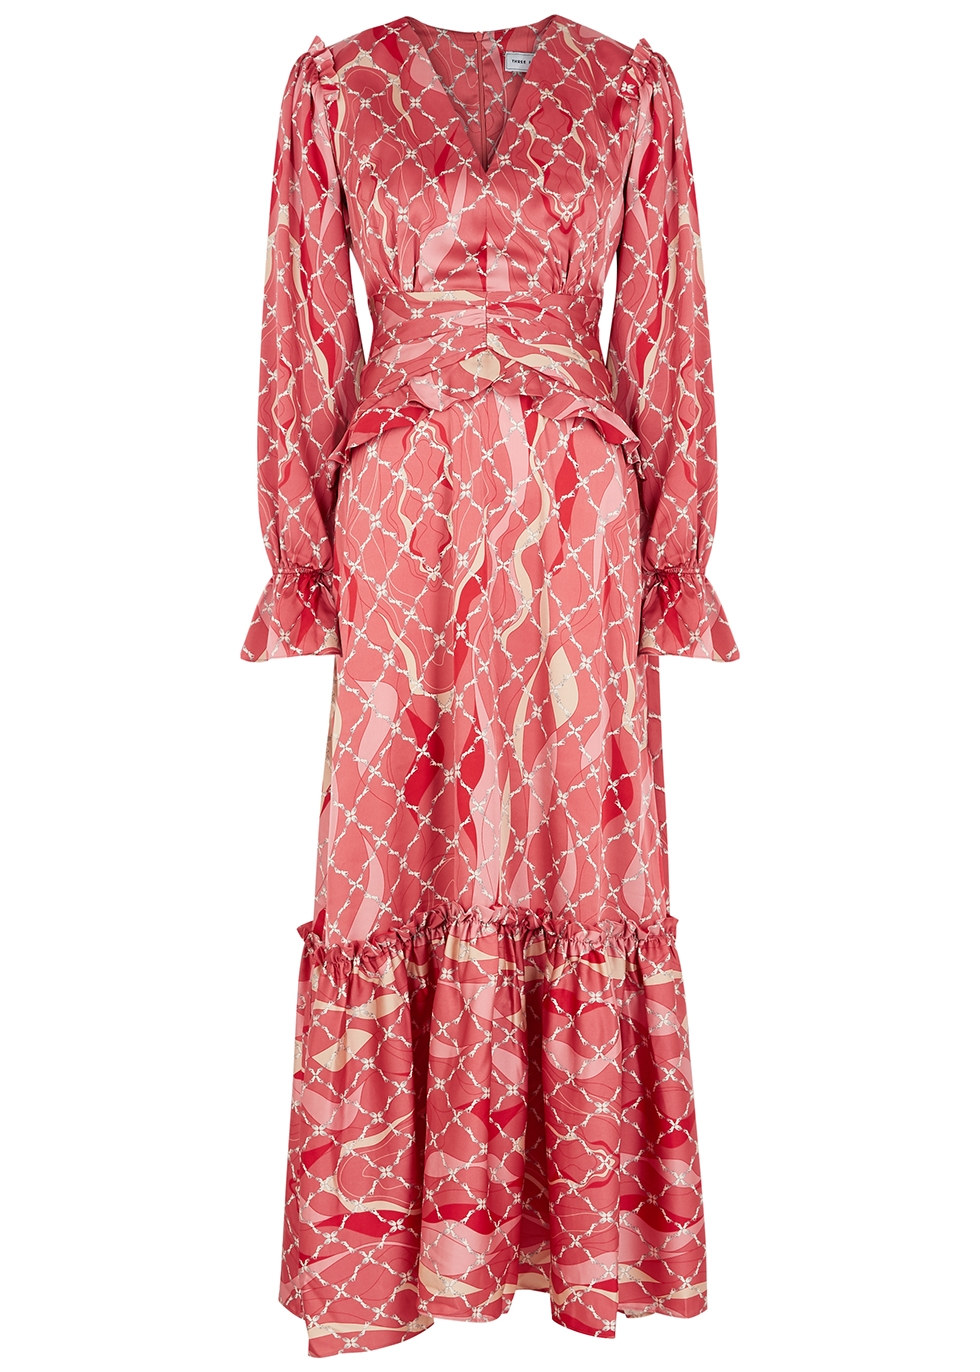 THREE FLOOR Fantasist pink printed satin dress - Harvey Nichols